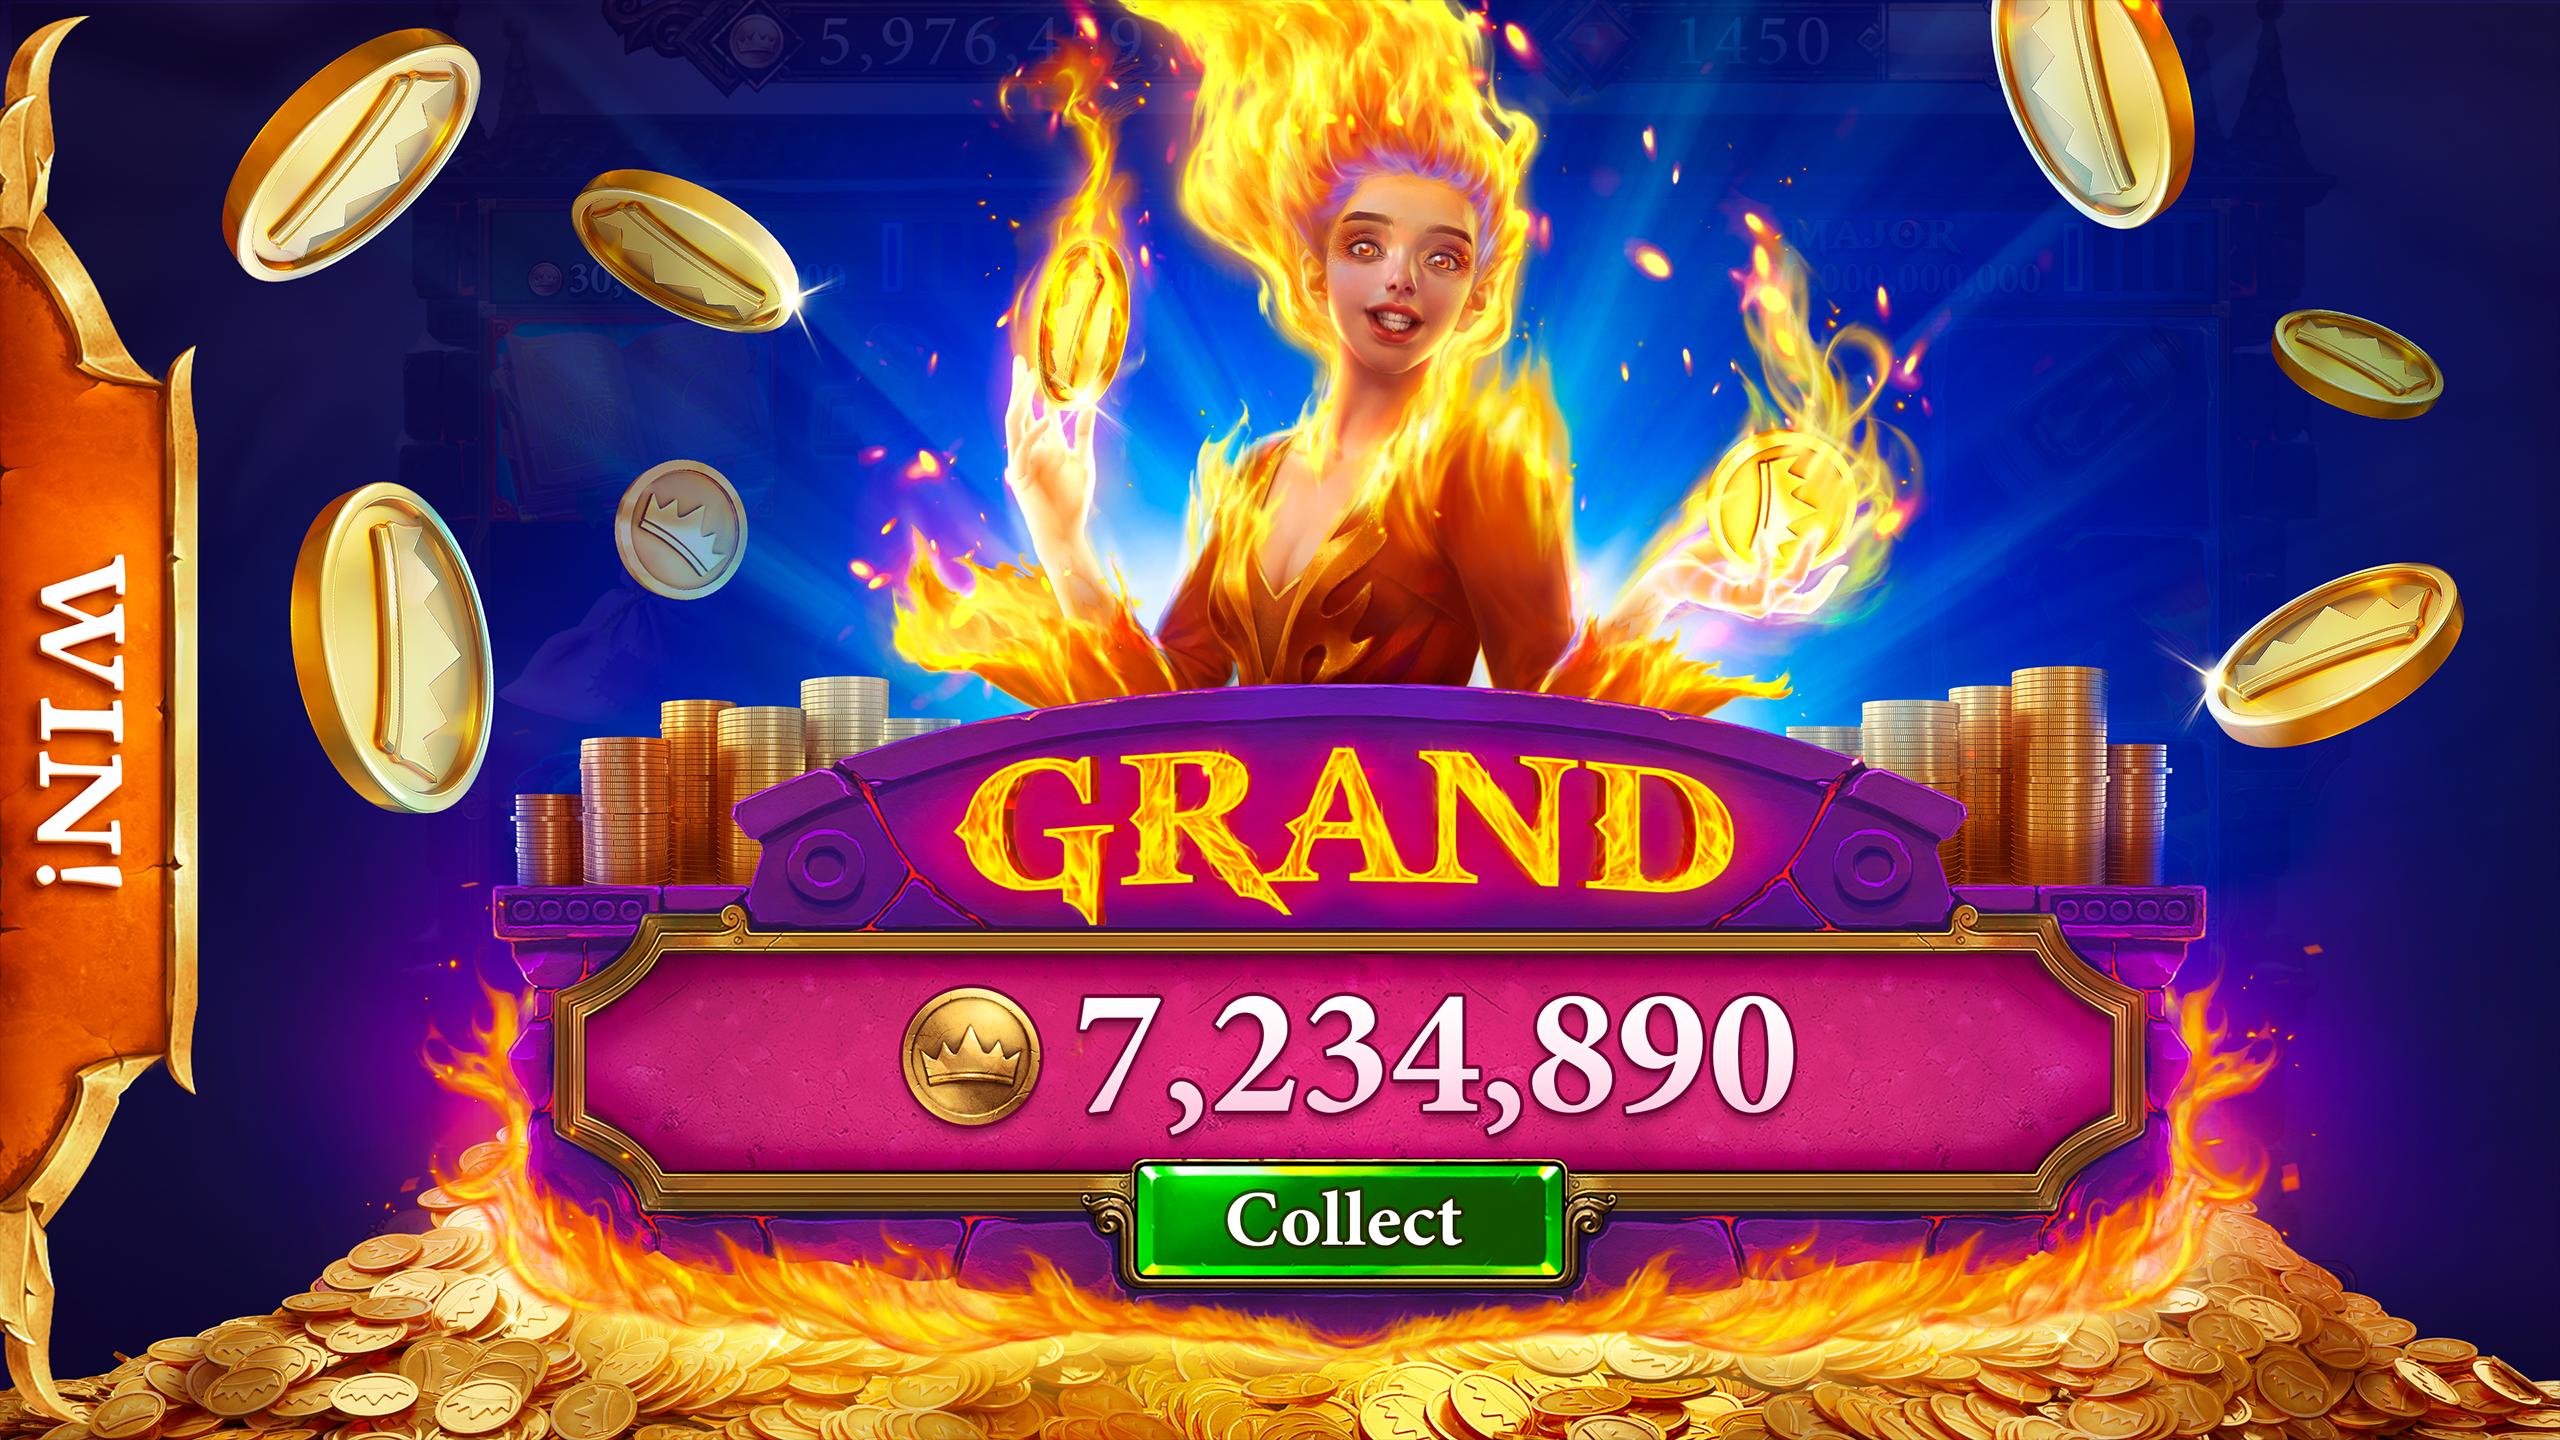 Scatter Slots Las Vegas Casino Game 777 Online 3.87.0 Screenshot 23